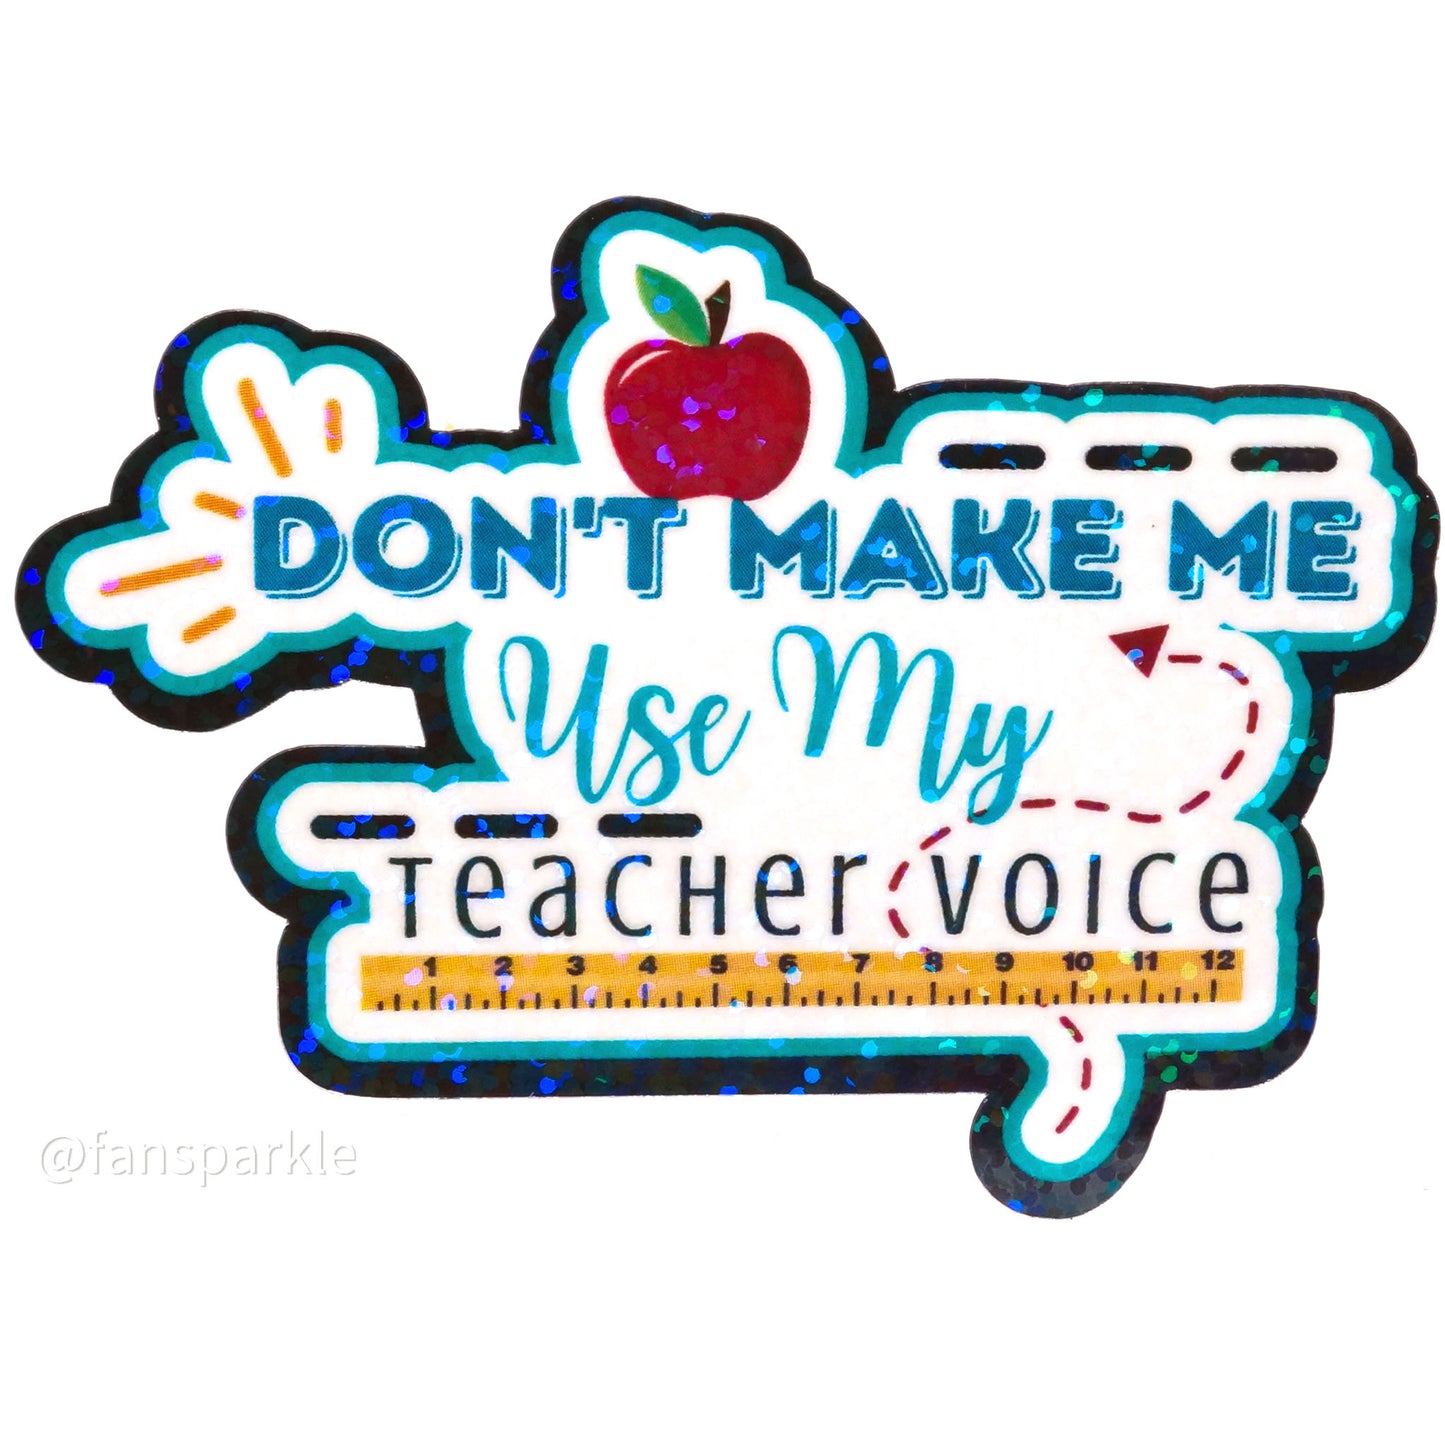 Don’t Make Me Use My Teacher Voice Sticker - Fan Sparkle